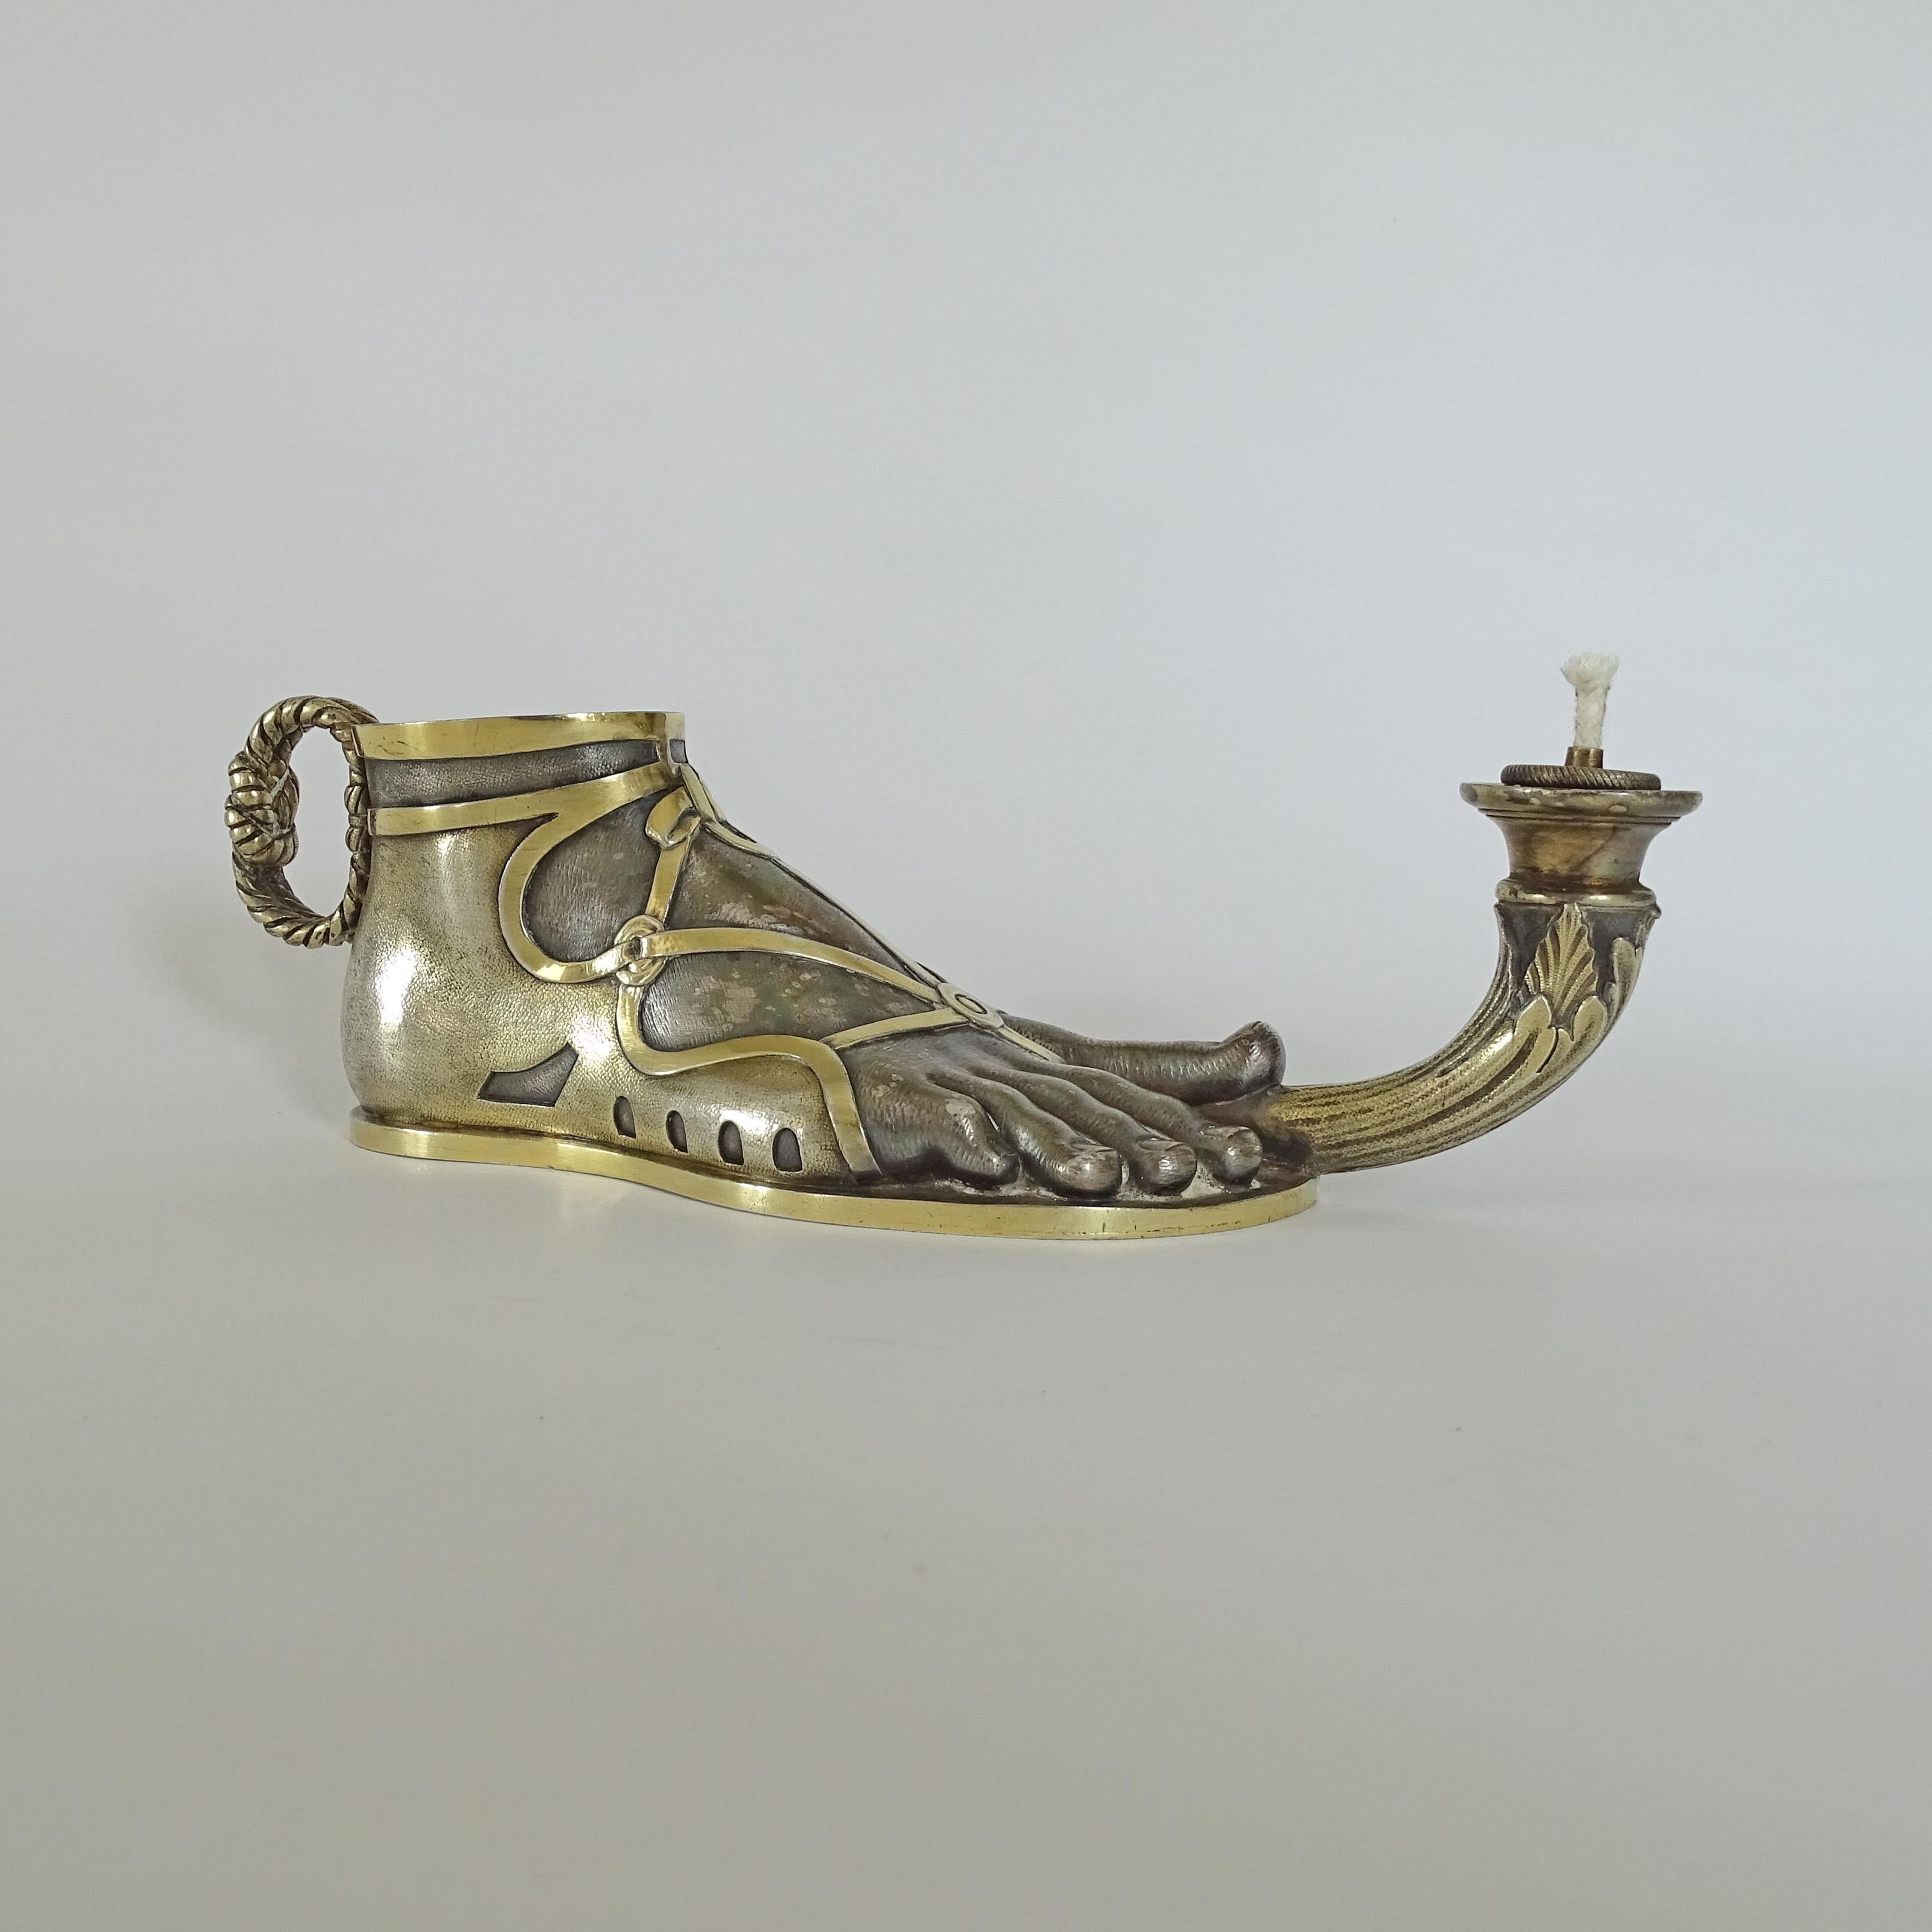 prächtiger Elkington & Co. Römische Öllampe mit Fuß aus Sterlingsilber, England 1840er Jahre

